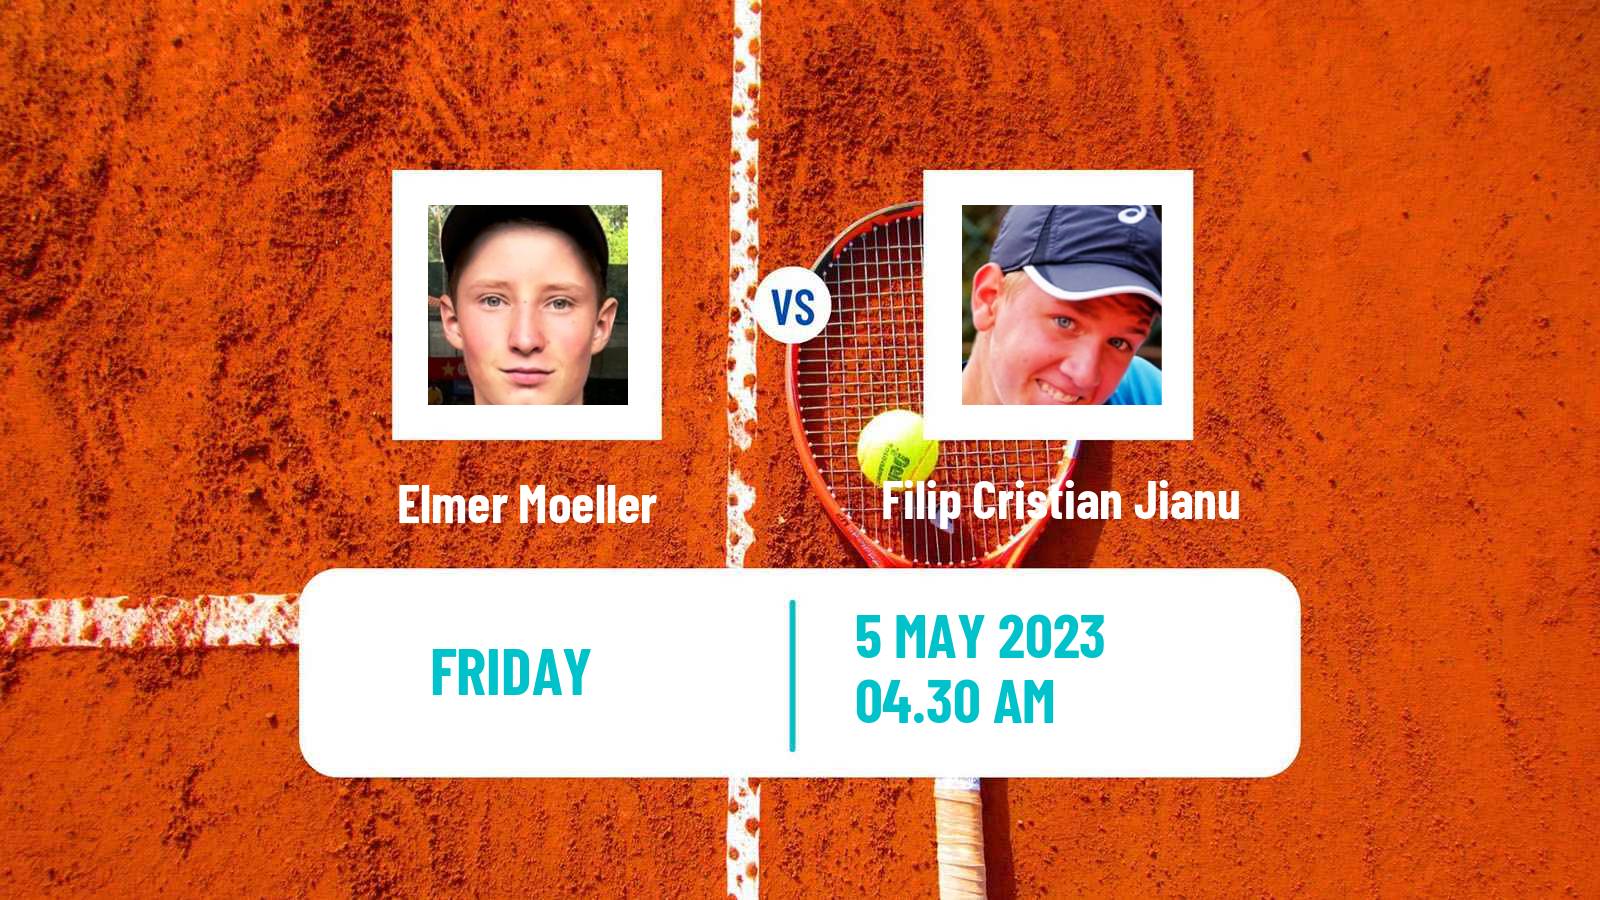 Tennis ITF Tournaments Elmer Moeller - Filip Cristian Jianu